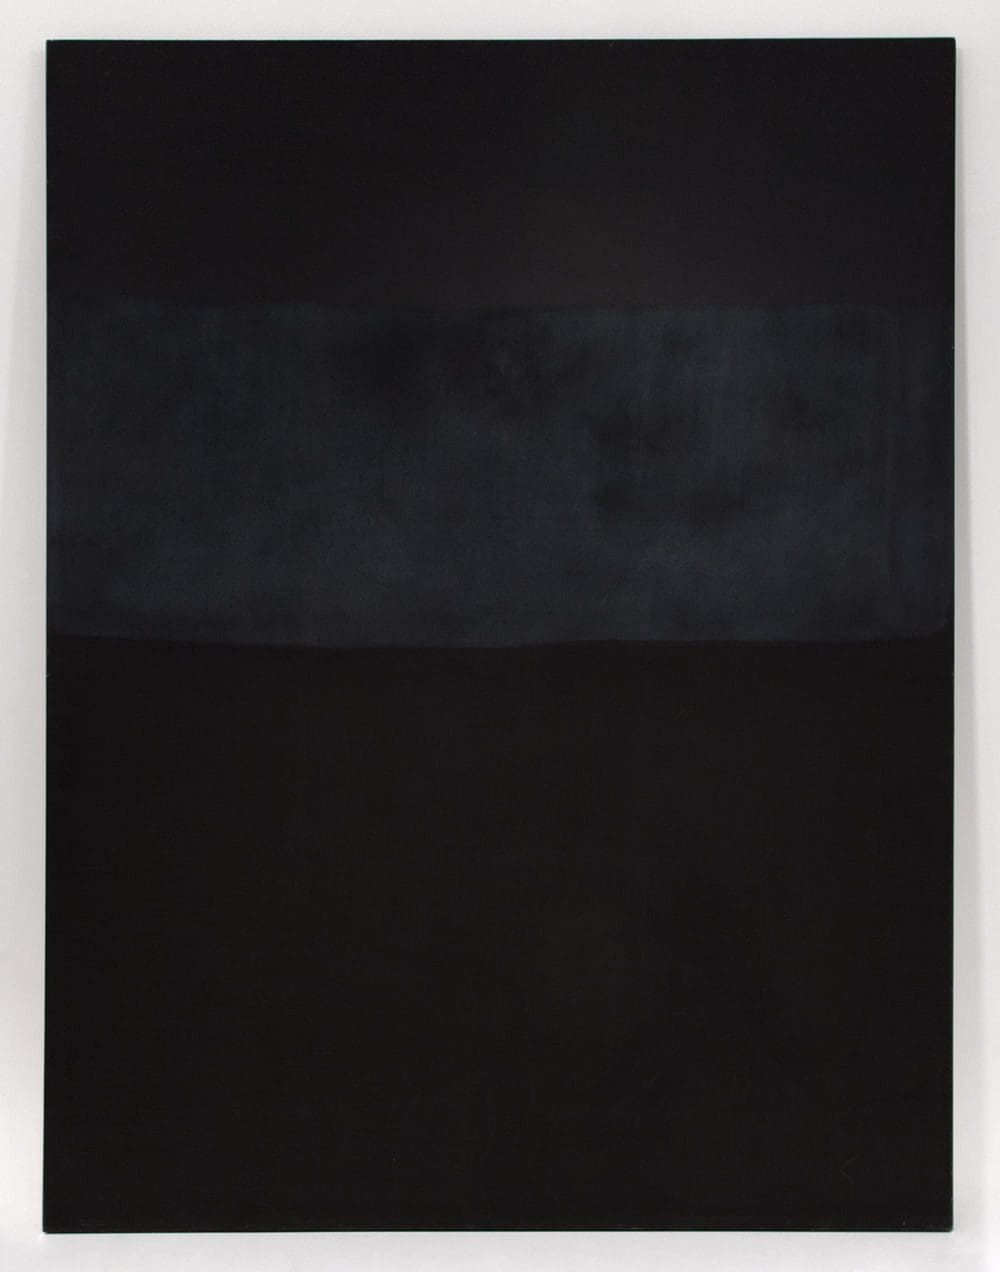 Night Sky Elegy 3, 1977, Oil on canvas, 86 x 64 inches (218.4 x 162.6 cm)